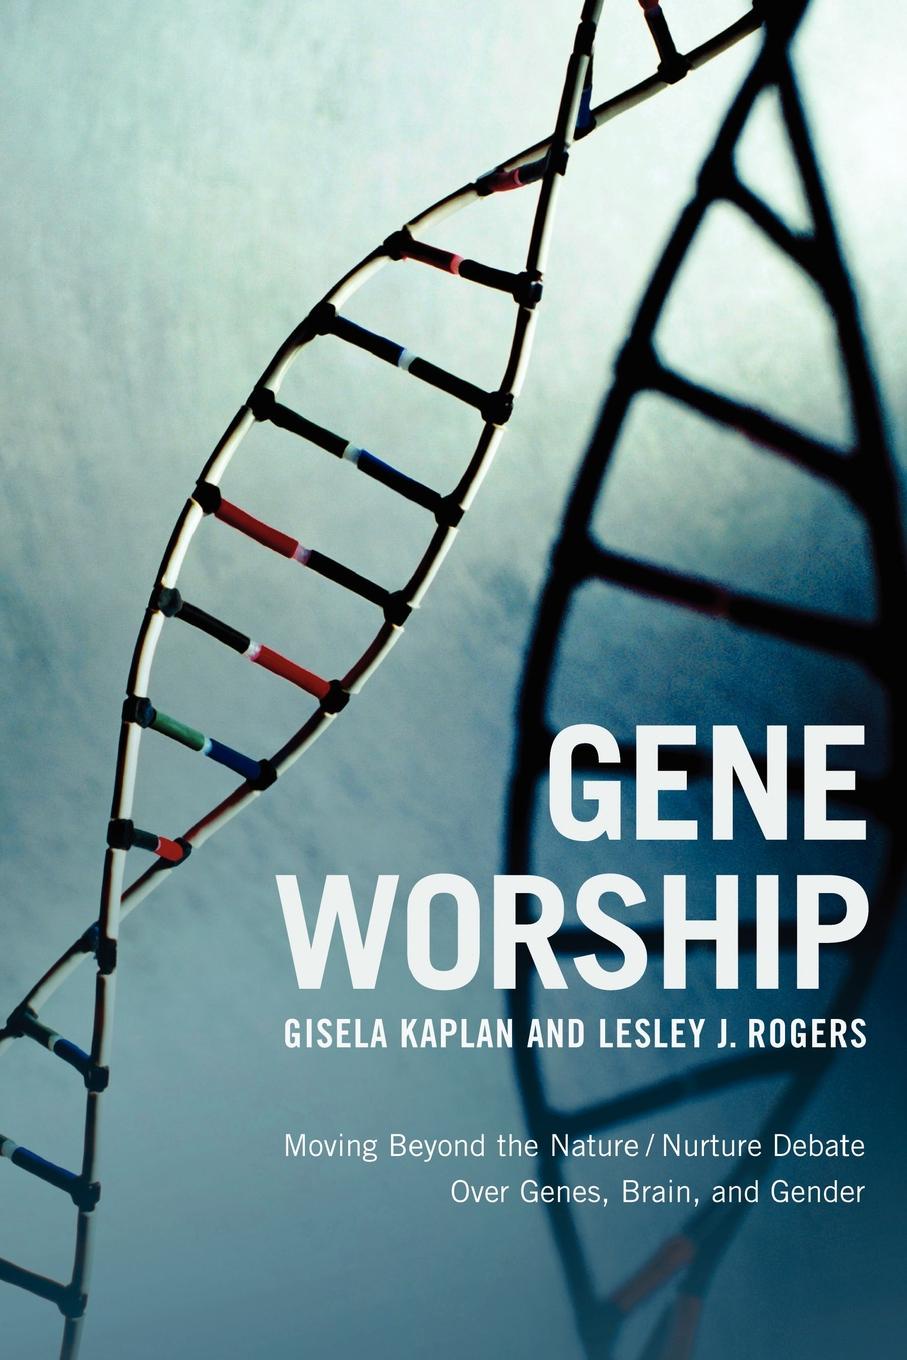 Gene Worship. Moving Beyond the Nature/ Nurture Debate Over Genes, Brain and Gender